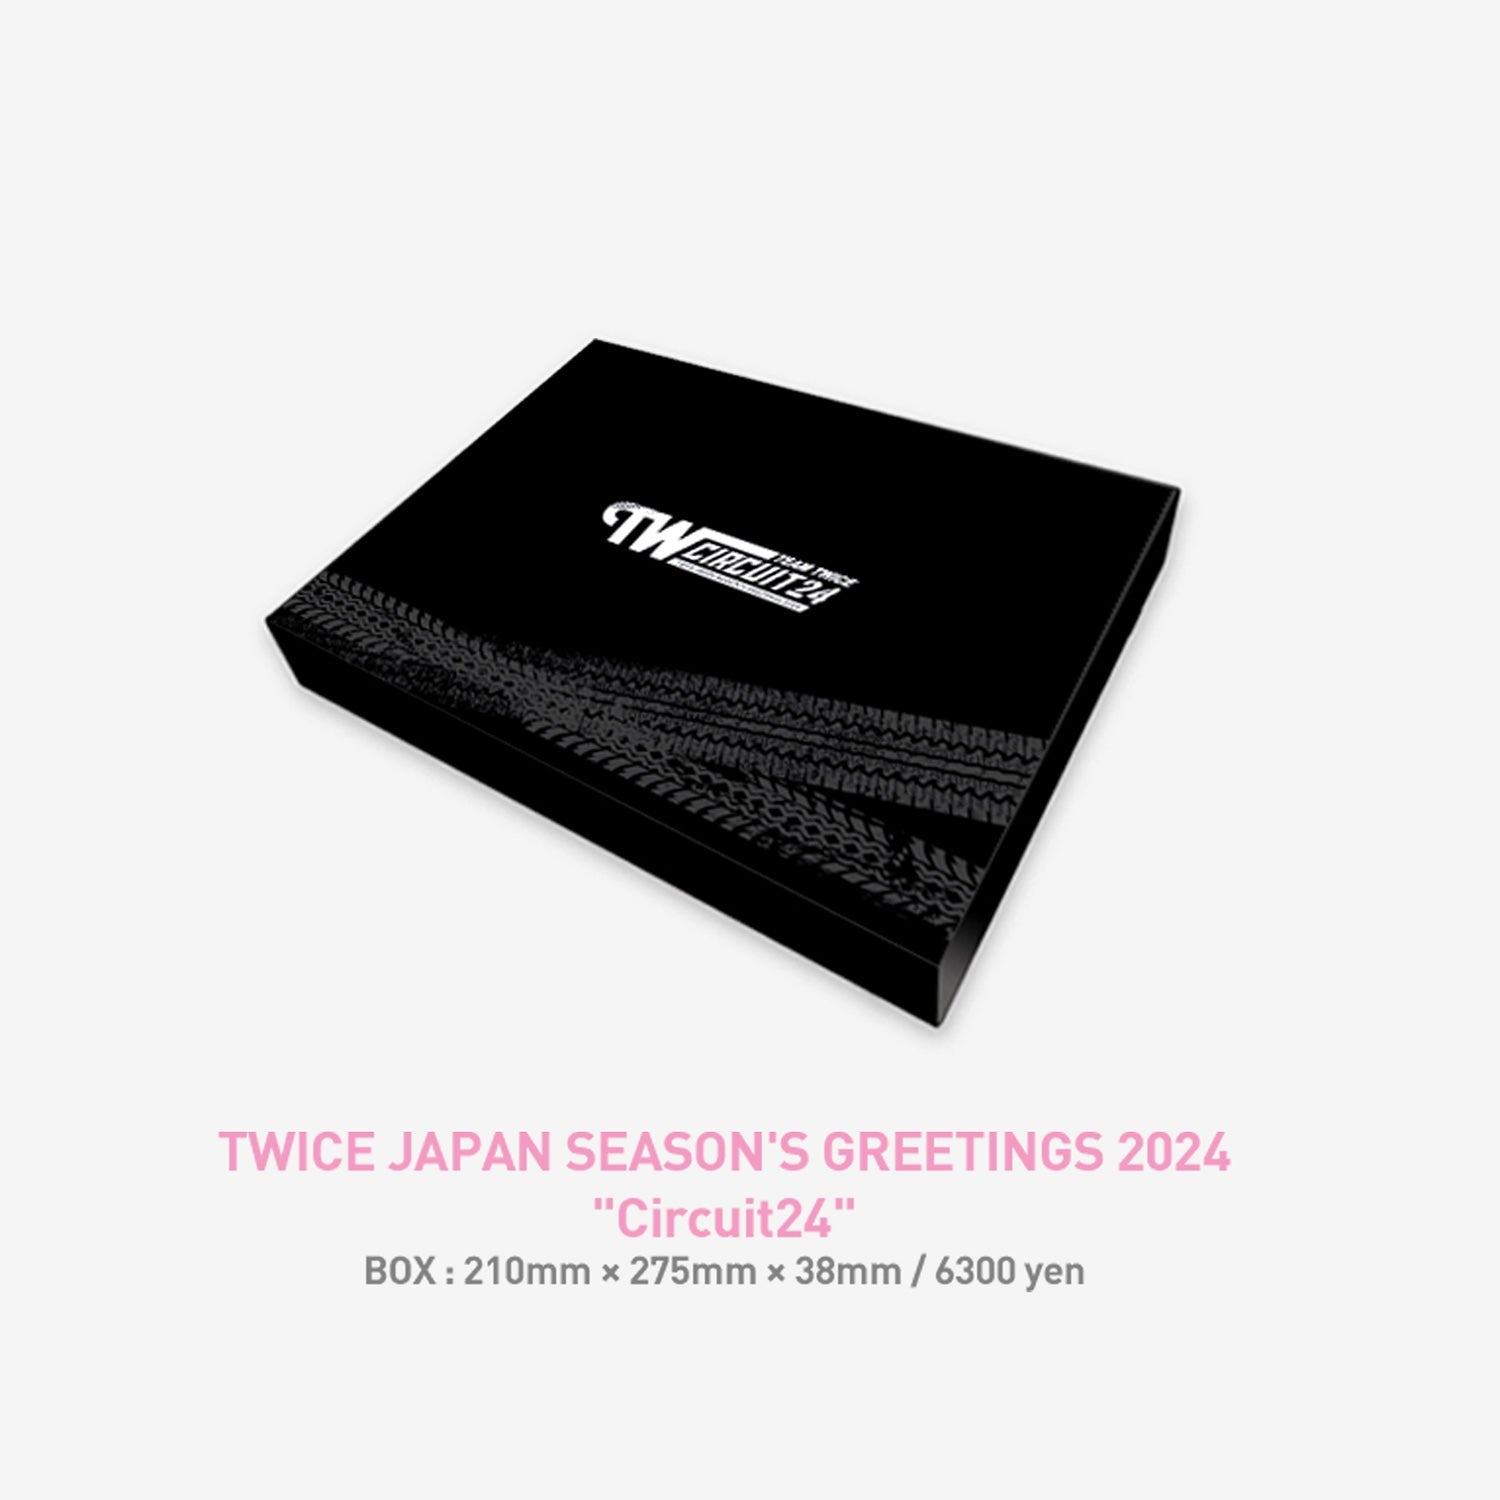 TWICE JAPAN SEASON’S GREETINGS 2024 “Circuit24”